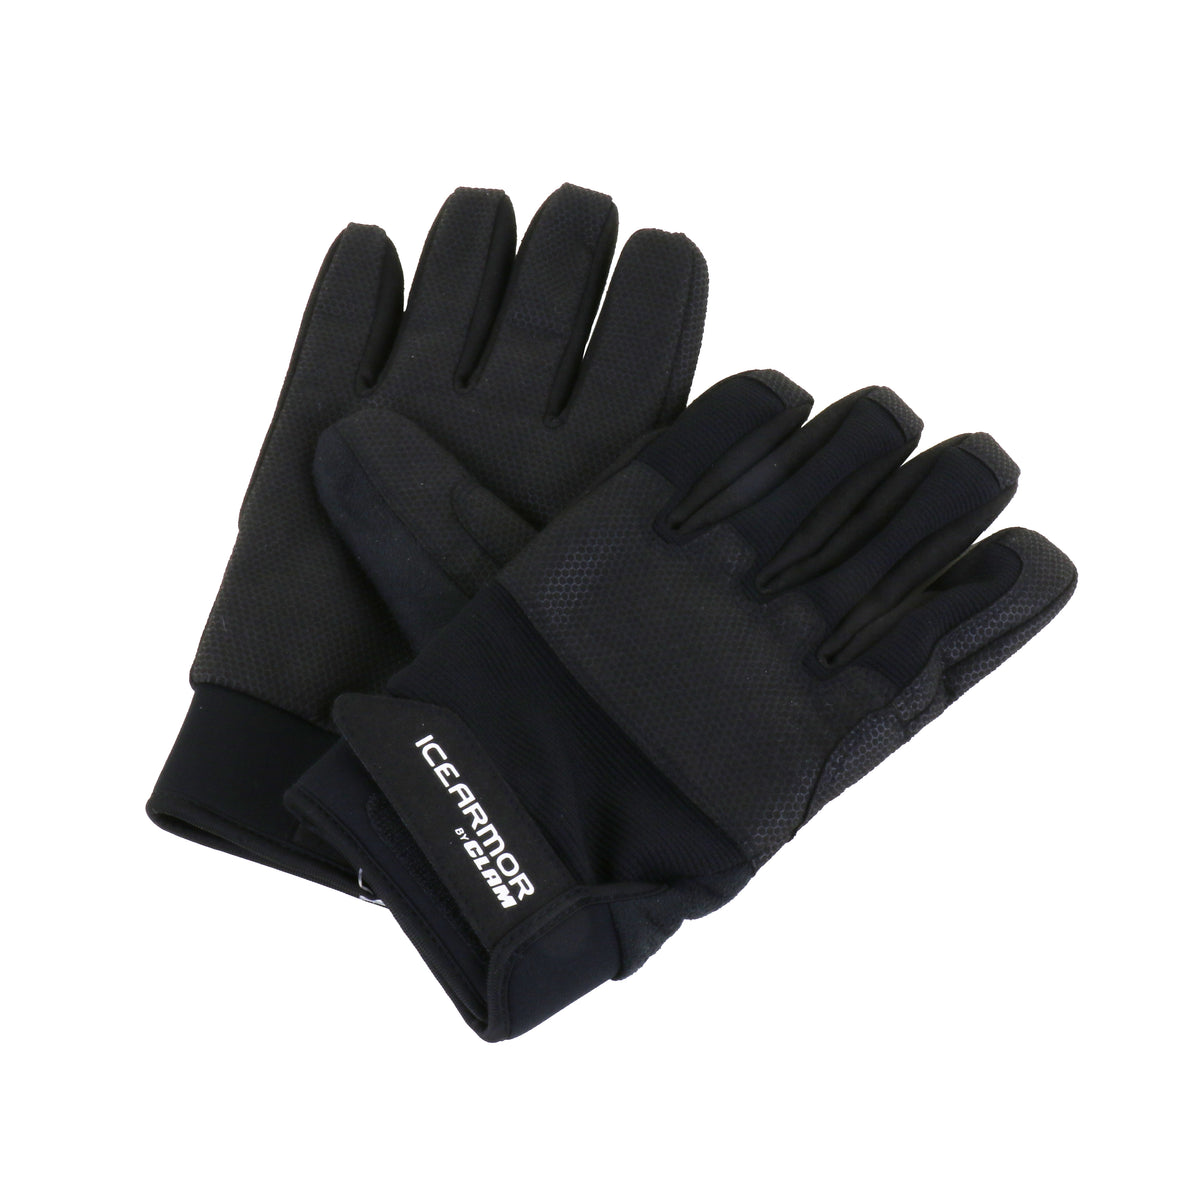  ICEARMOR by Clam Neoprene Grip Glove, Black, 2X-Large